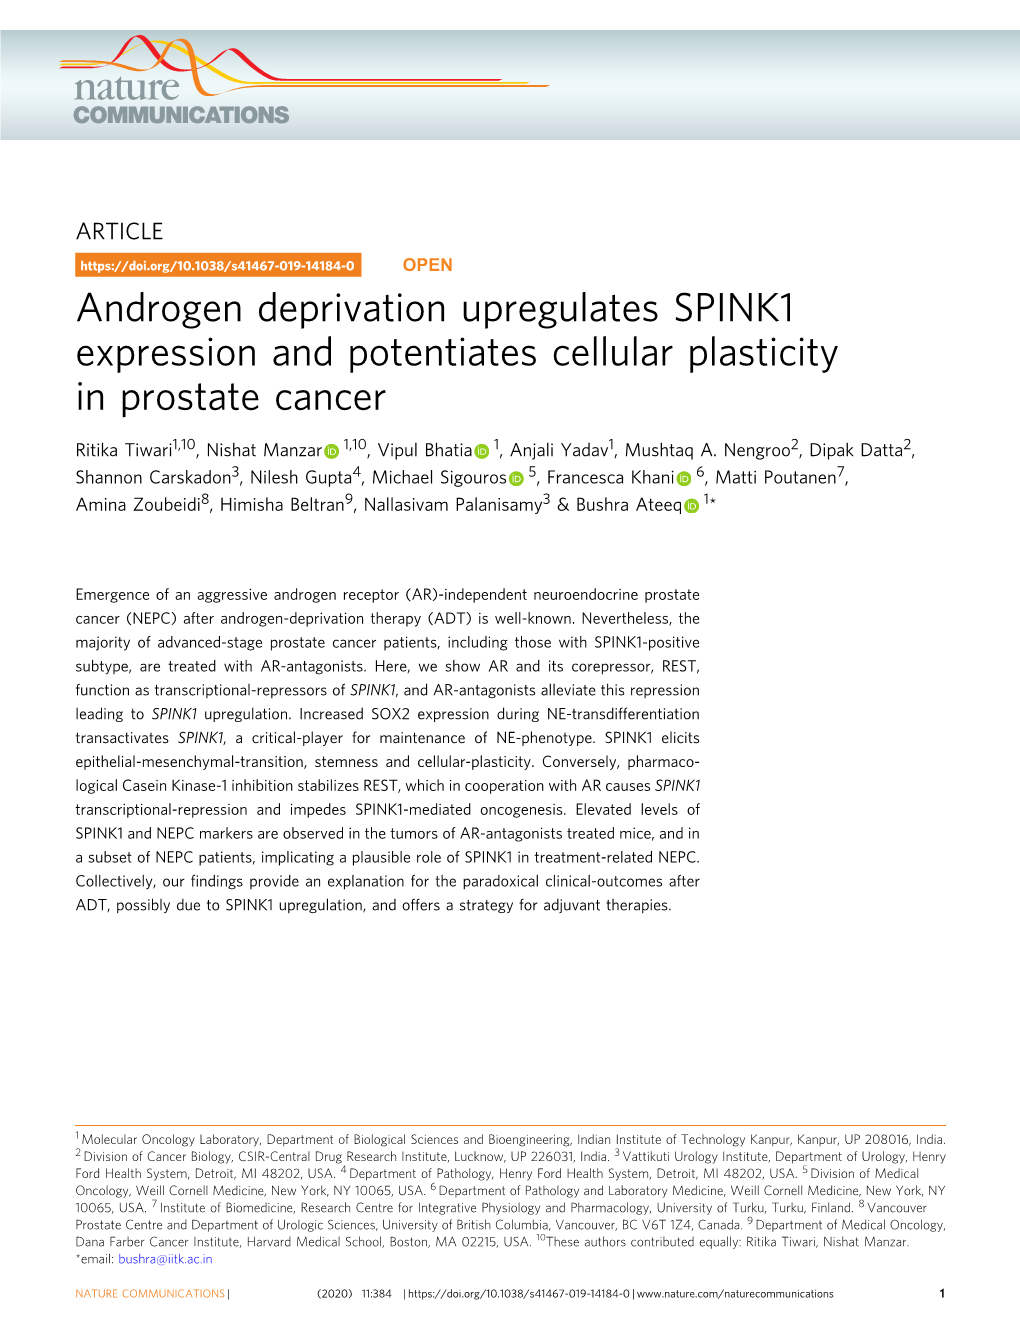 Androgen Deprivation Upregulates SPINK1 Expression and Potentiates Cellular Plasticity in Prostate Cancer